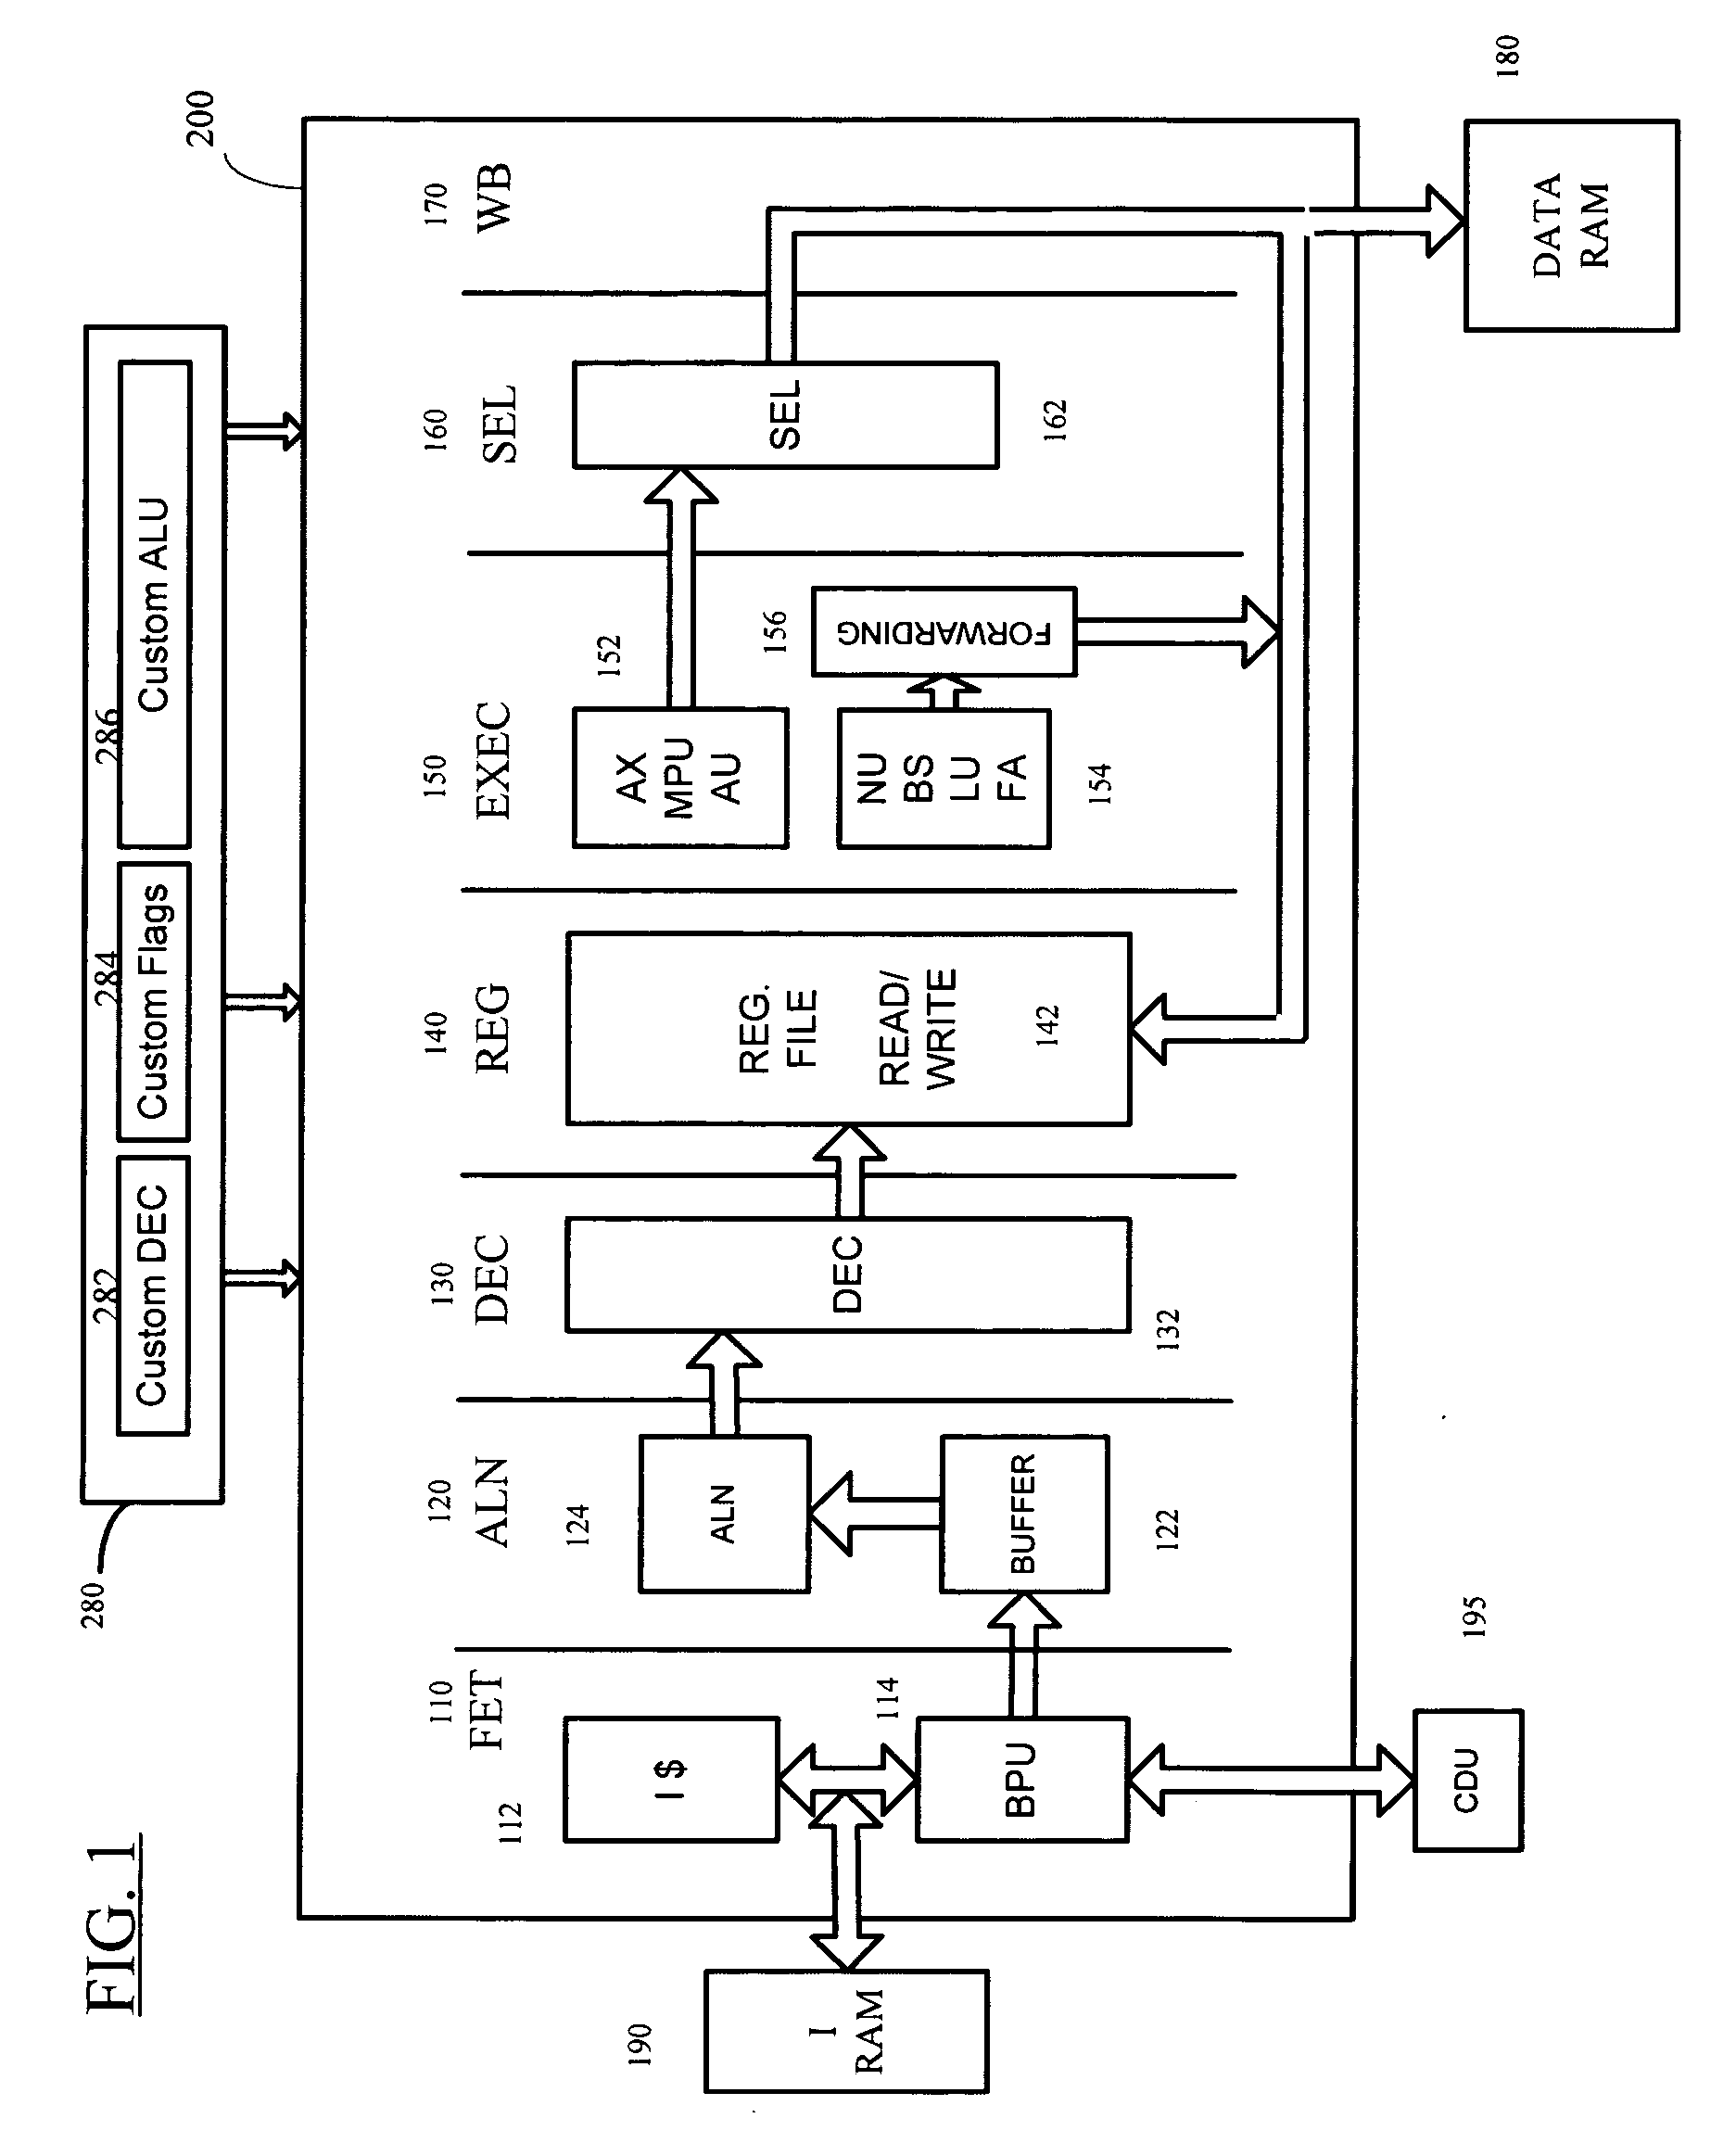 Microprocessor architecture including unified cache debug unit